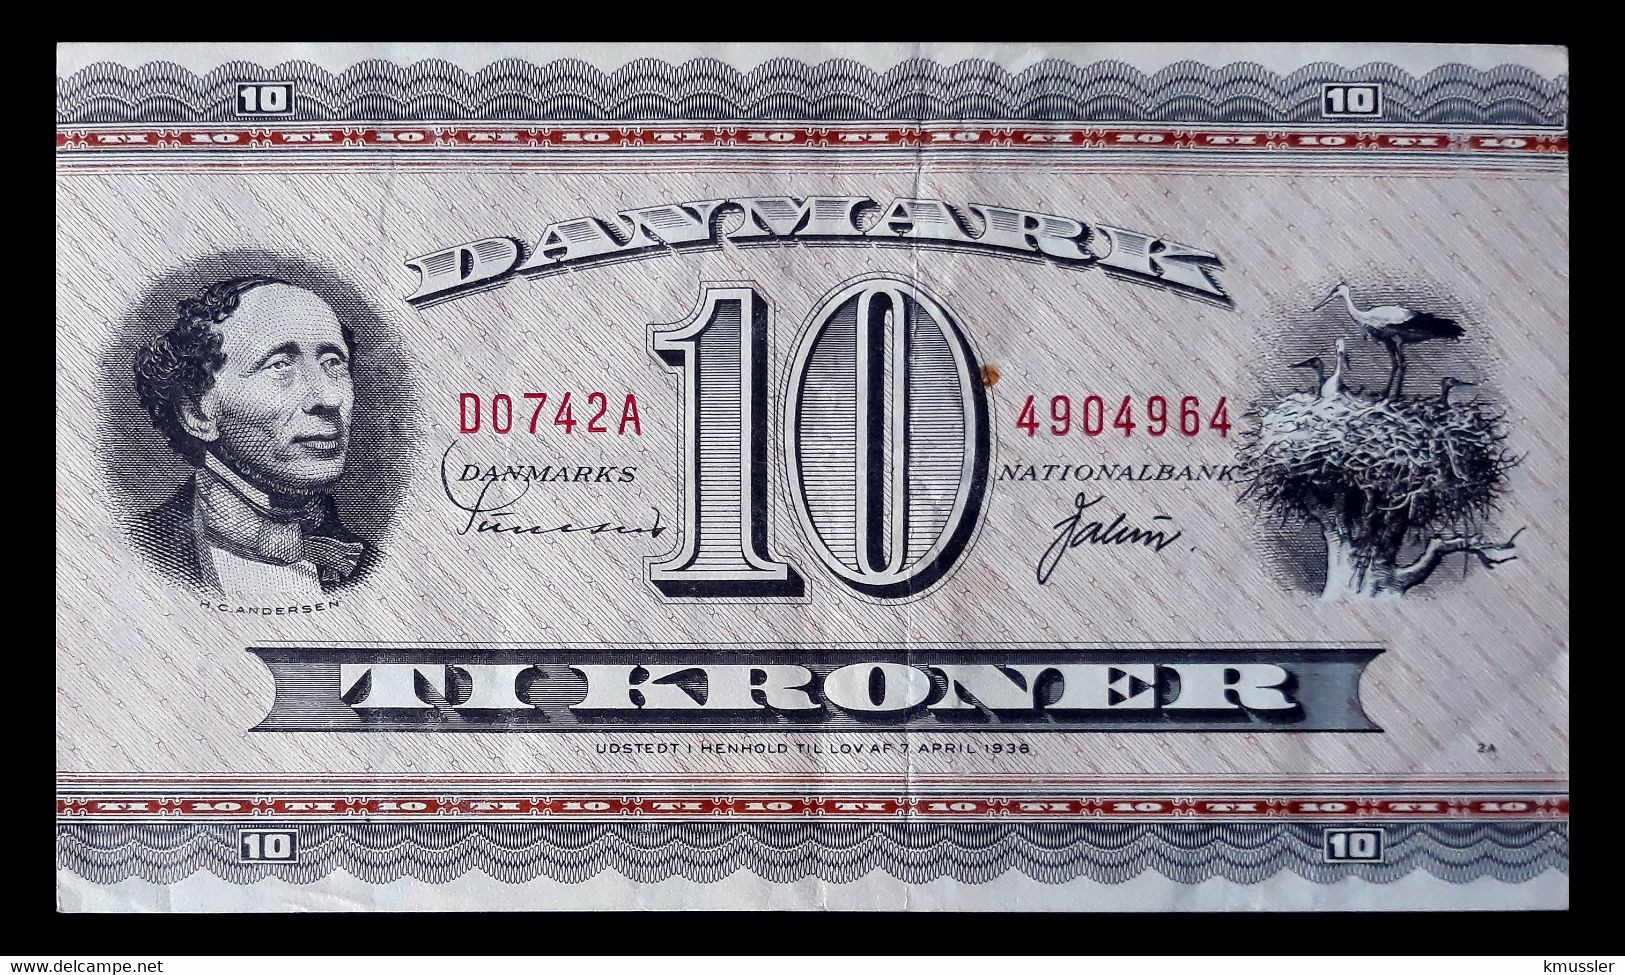 # # # Banknote Dänemark (Denmark) 10 Kroner 1936 # # # - Denmark